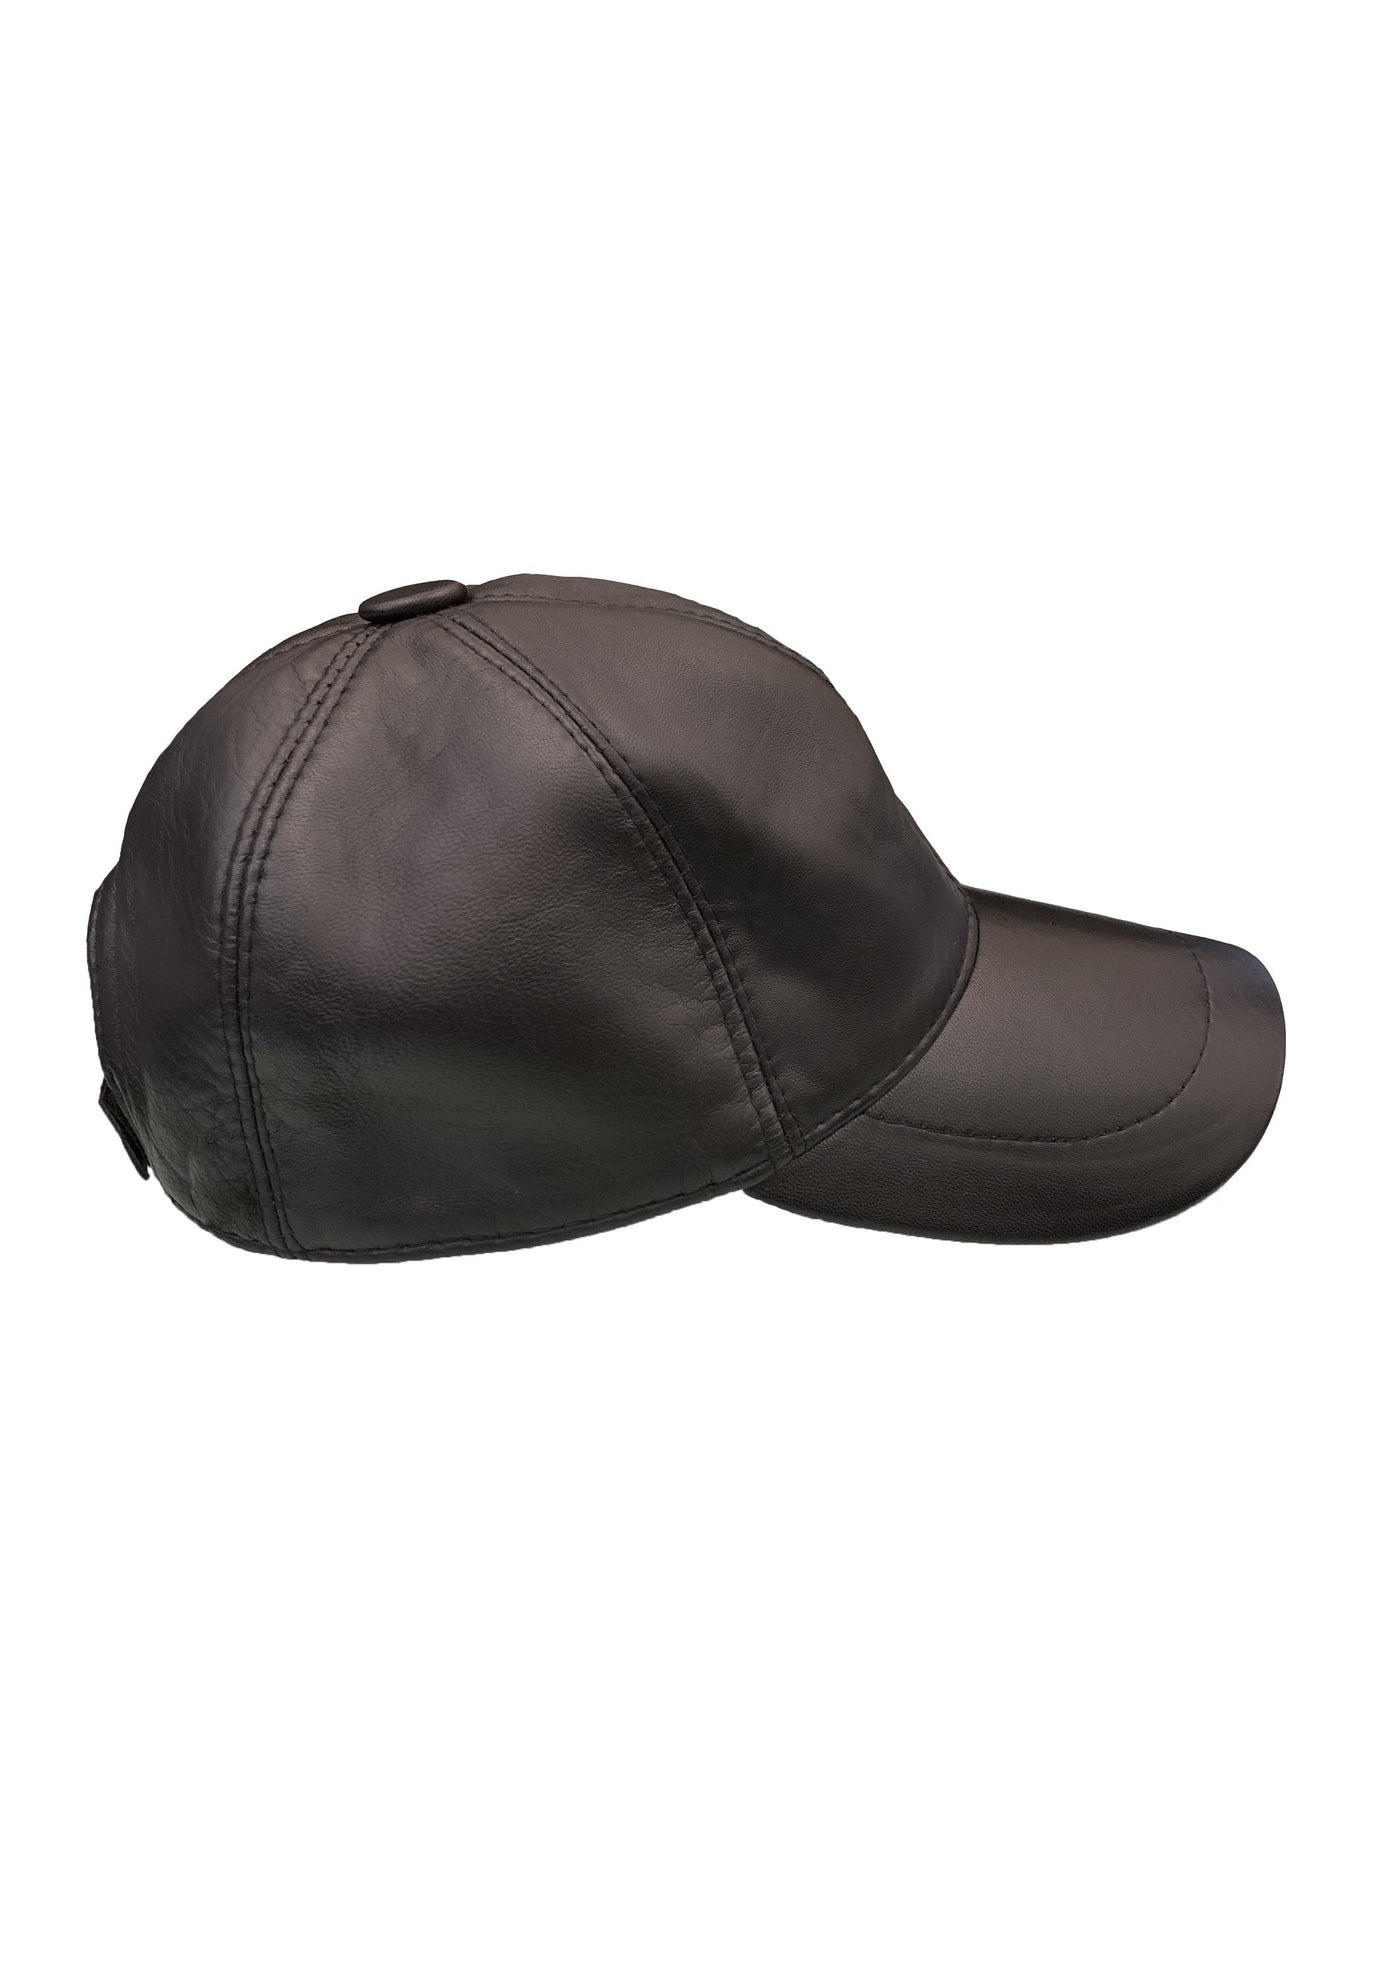 Leather Baseball Cap - Black